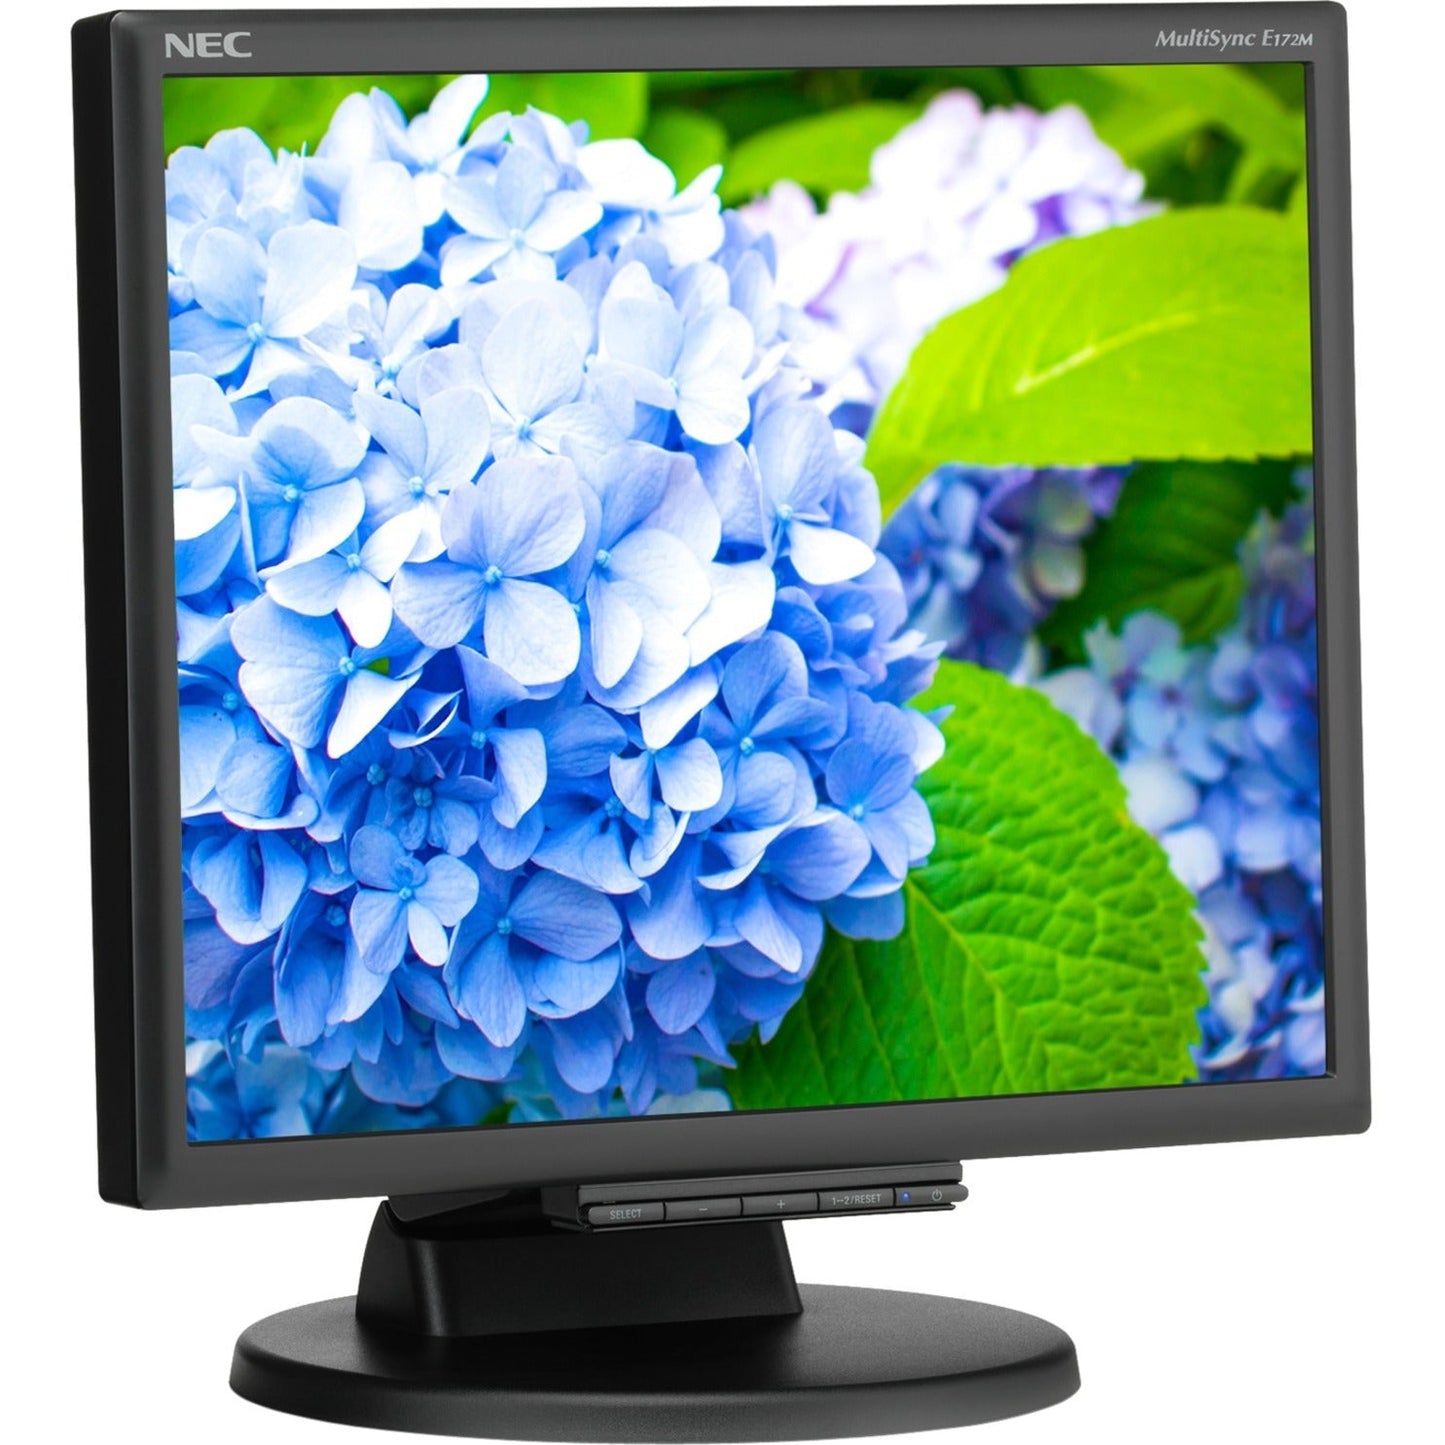 NEC Display E172M-BK 17" SXGA LCD Monitor - 5:4 - Black